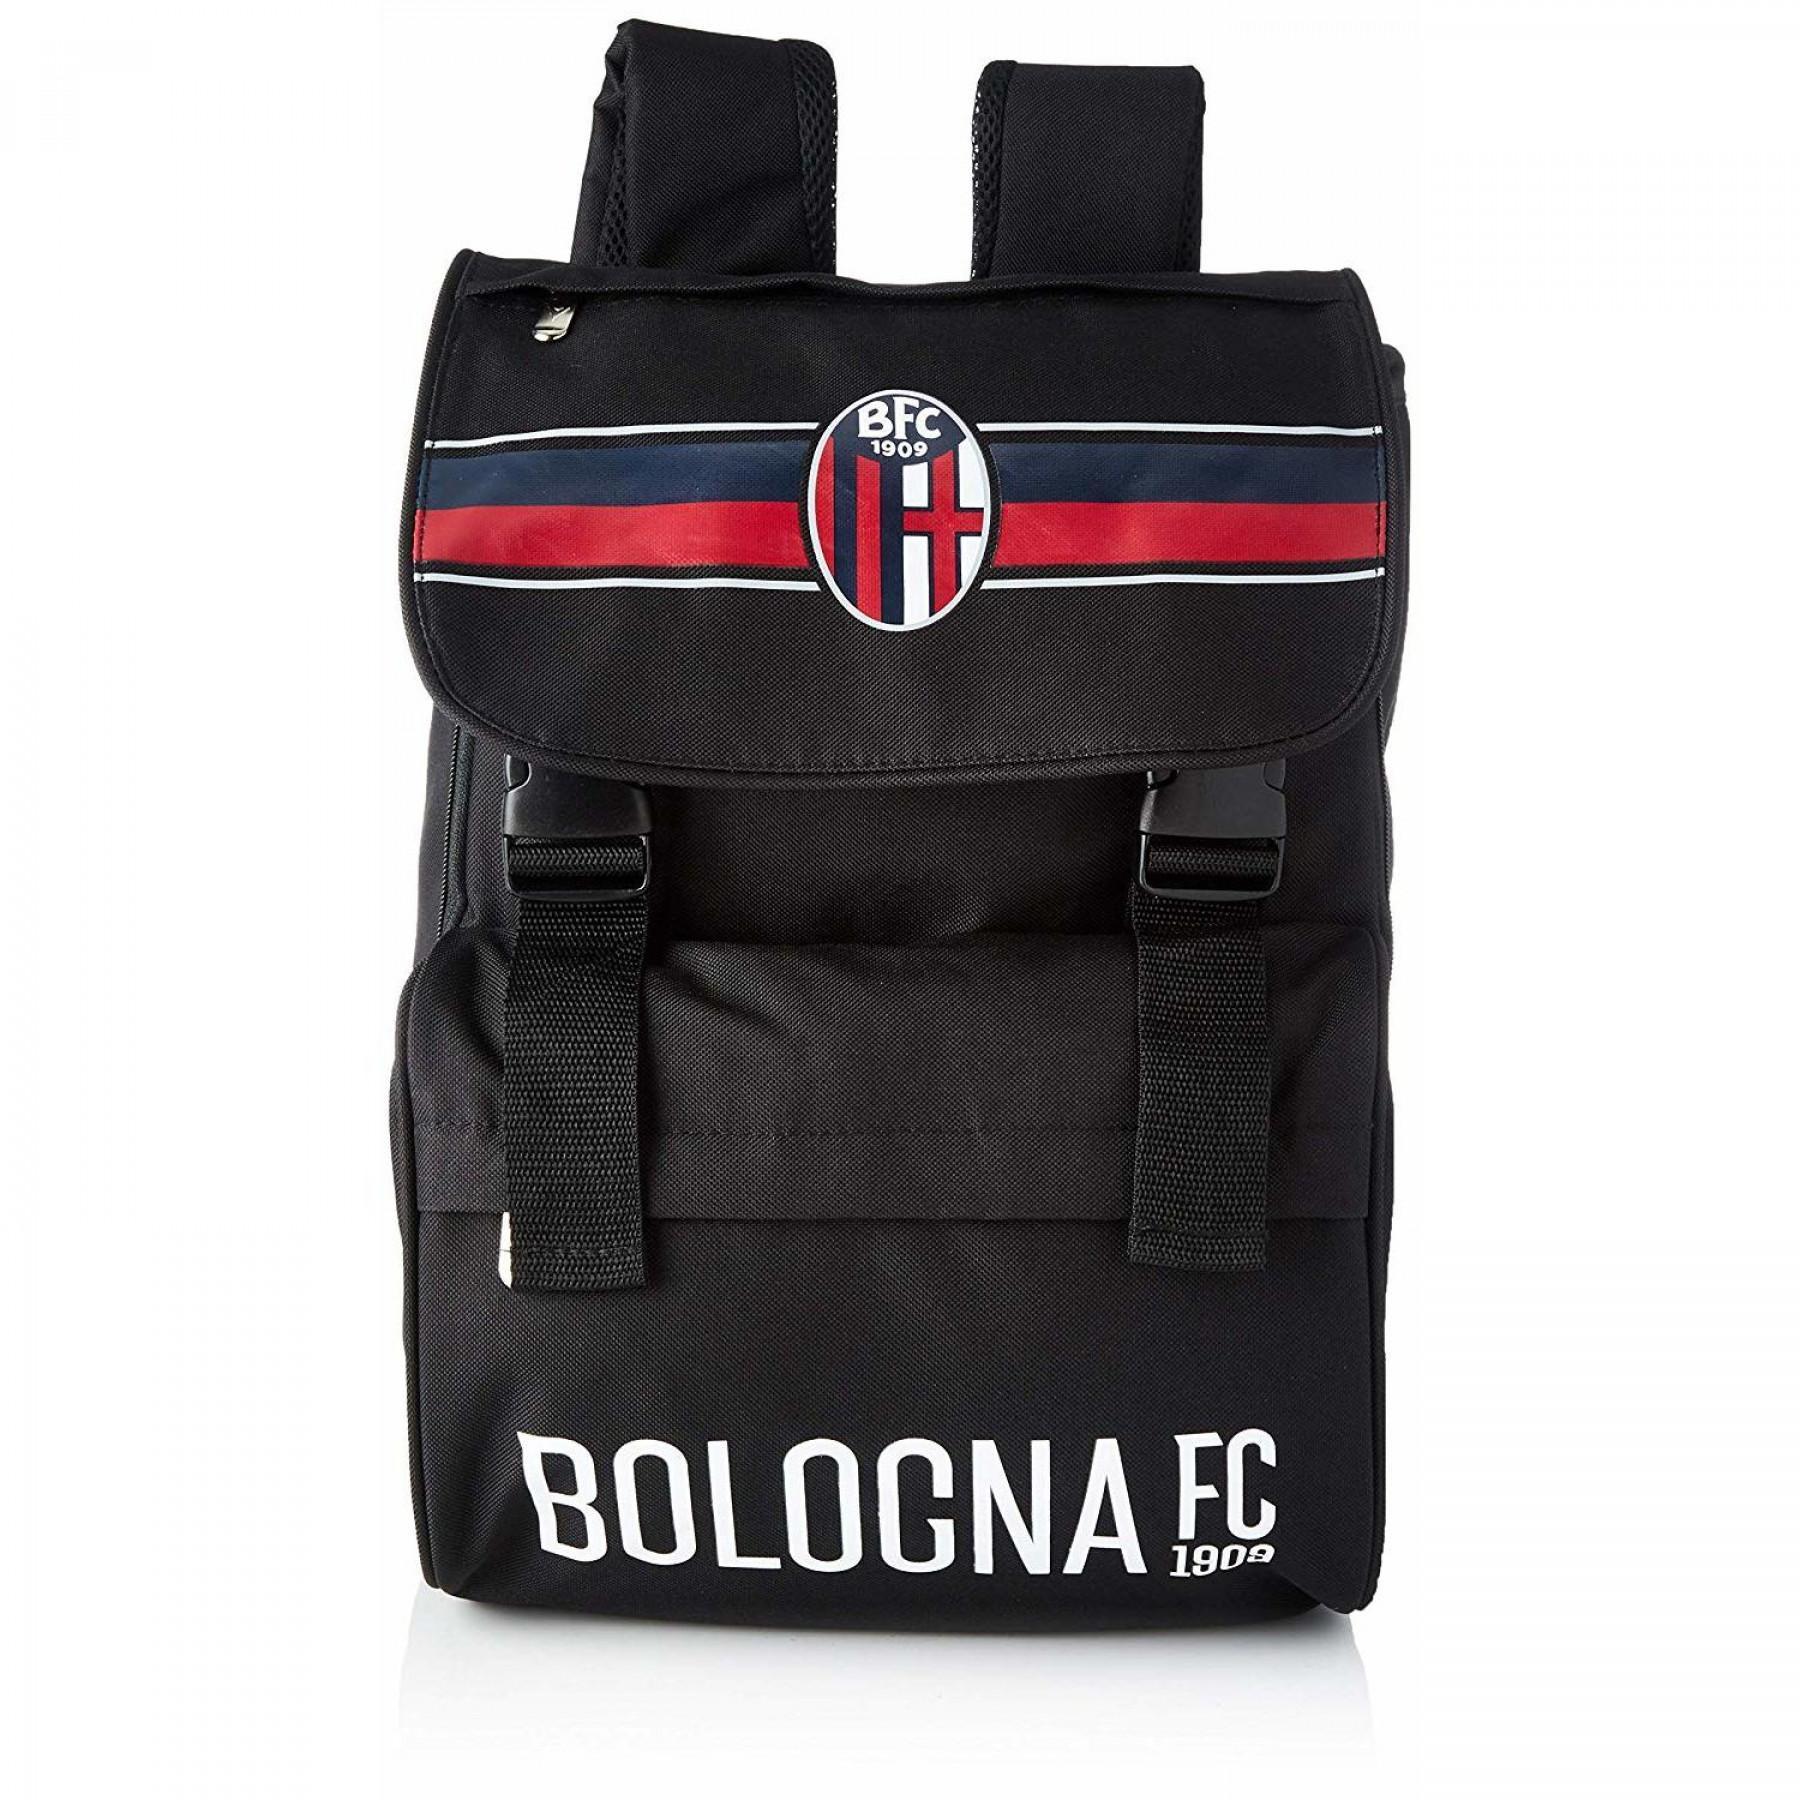 Backpack Bologne 19/20